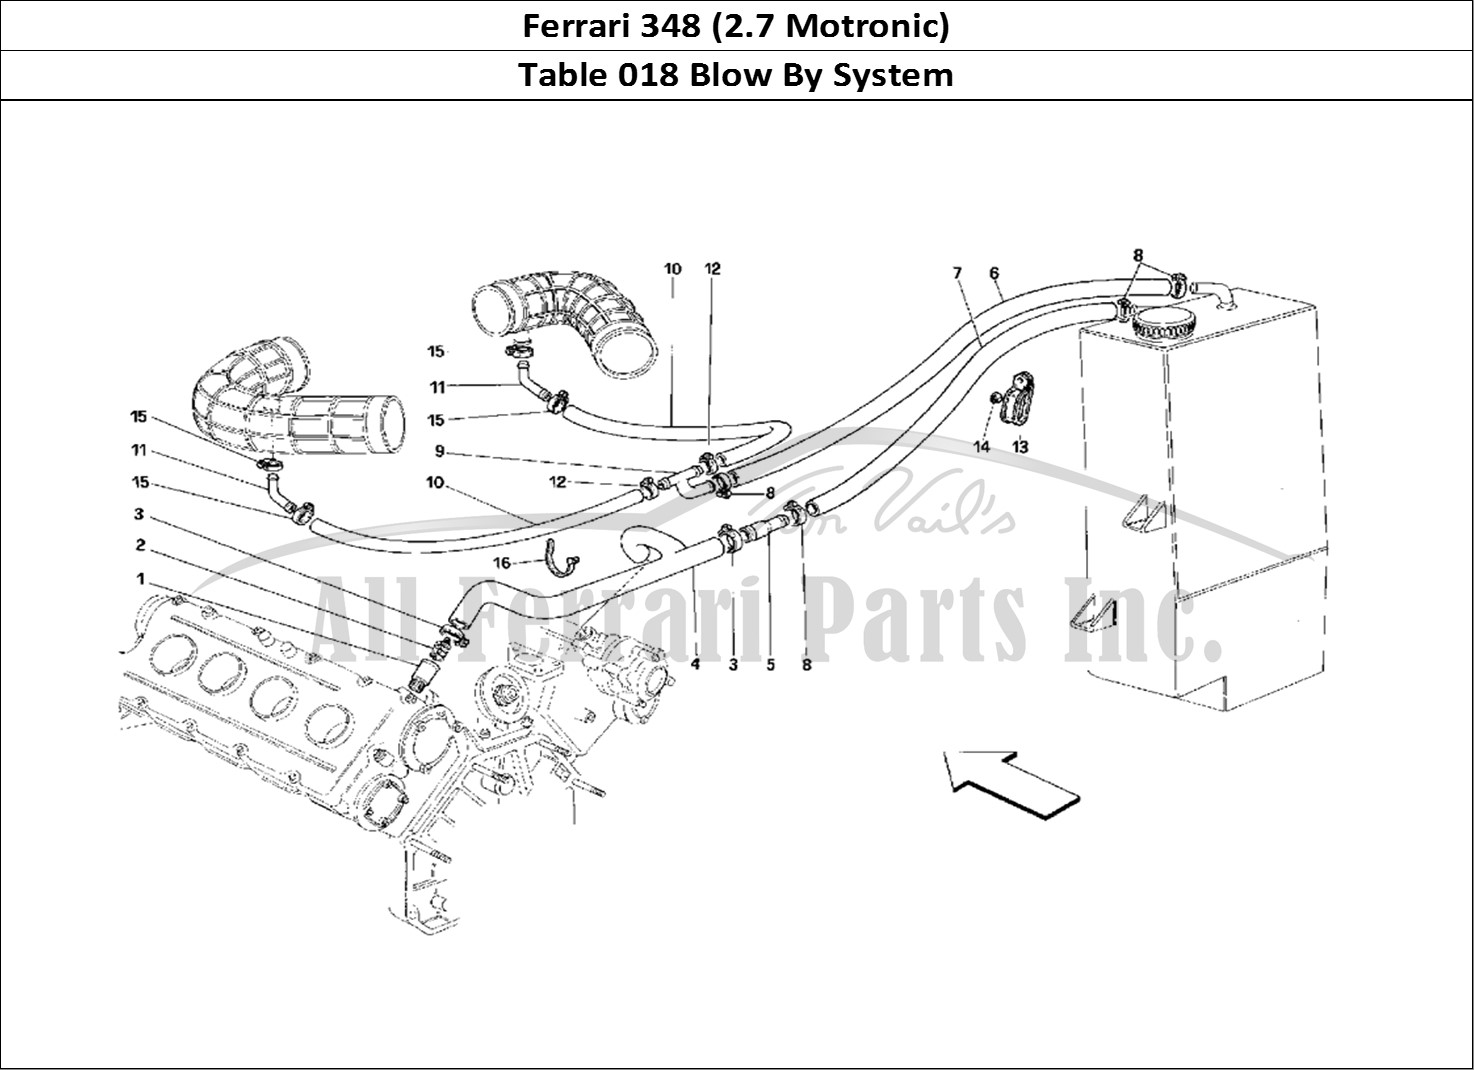 Ferrari Parts Ferrari 348 (2.7 Motronic) Page 018 Blow - By System